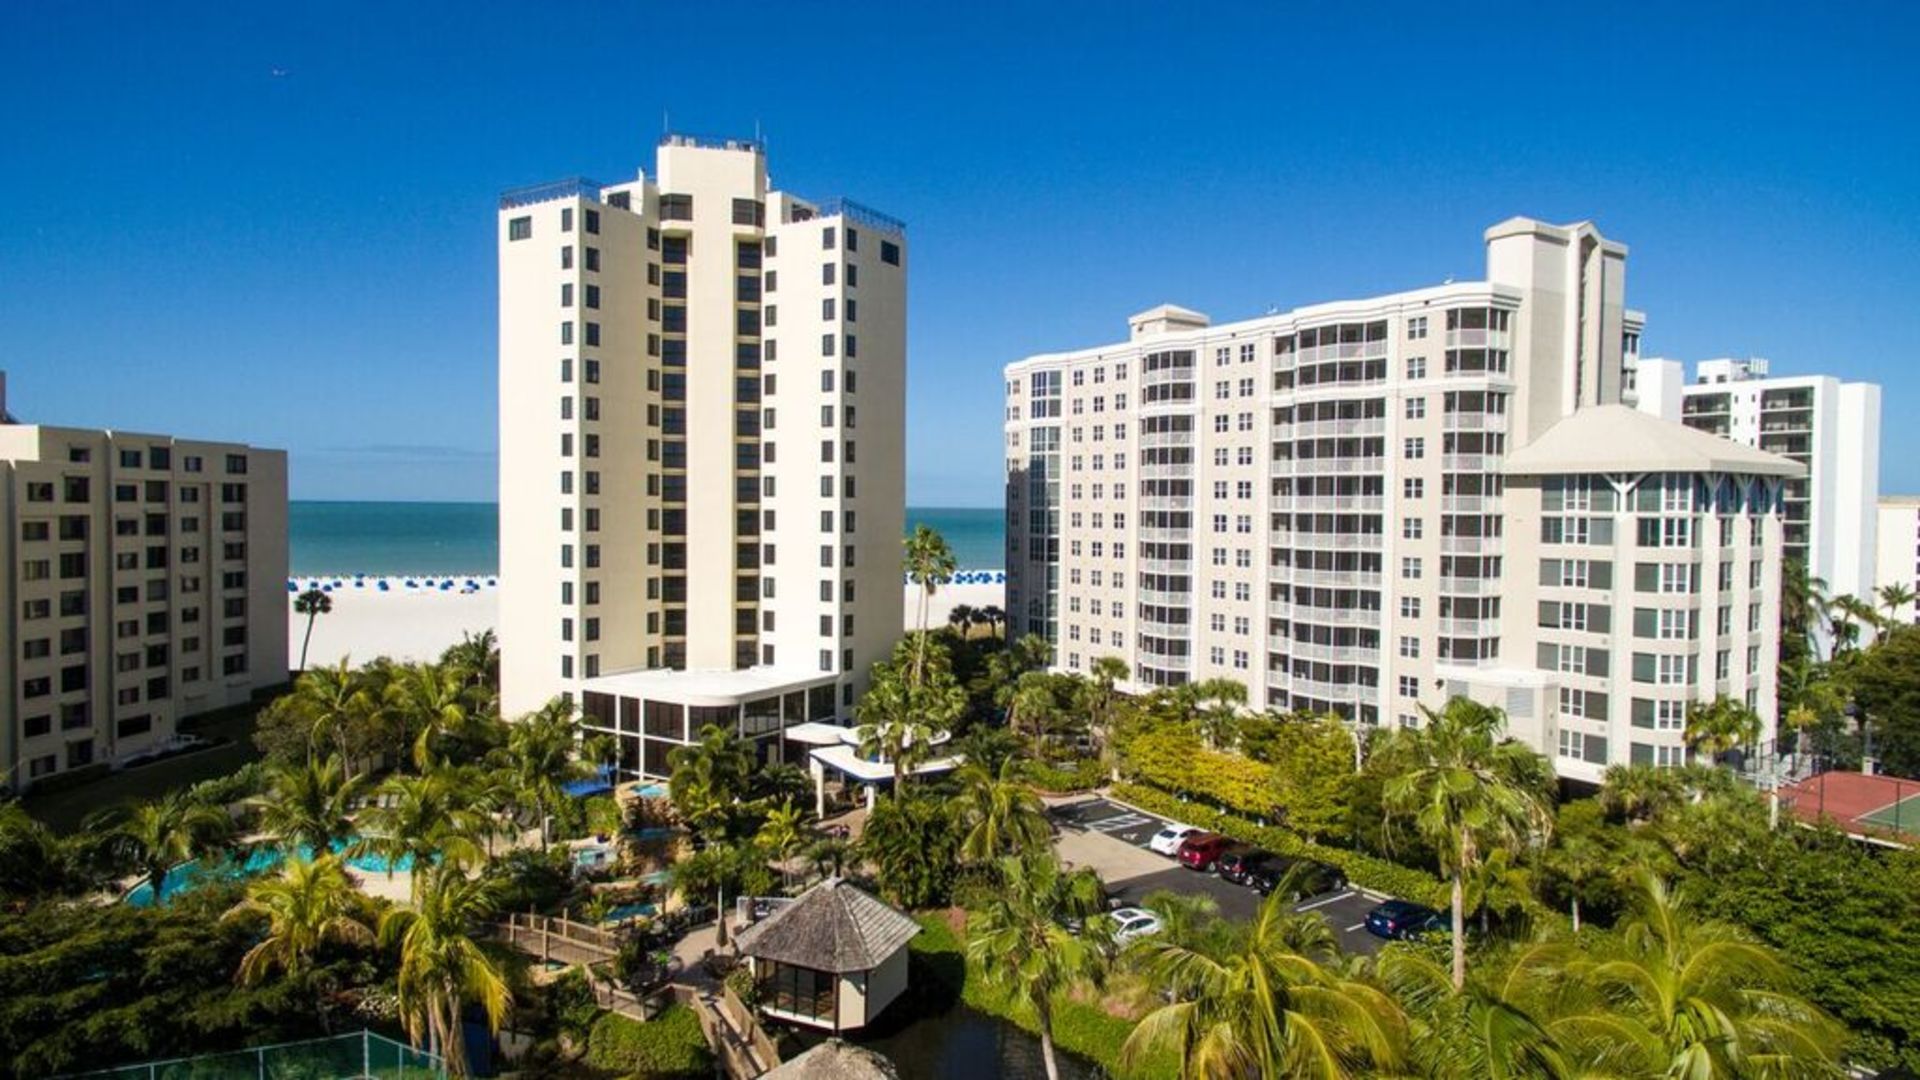 2019 Sports Facilities Guide: SunStream Hotels & Resorts, Florida||